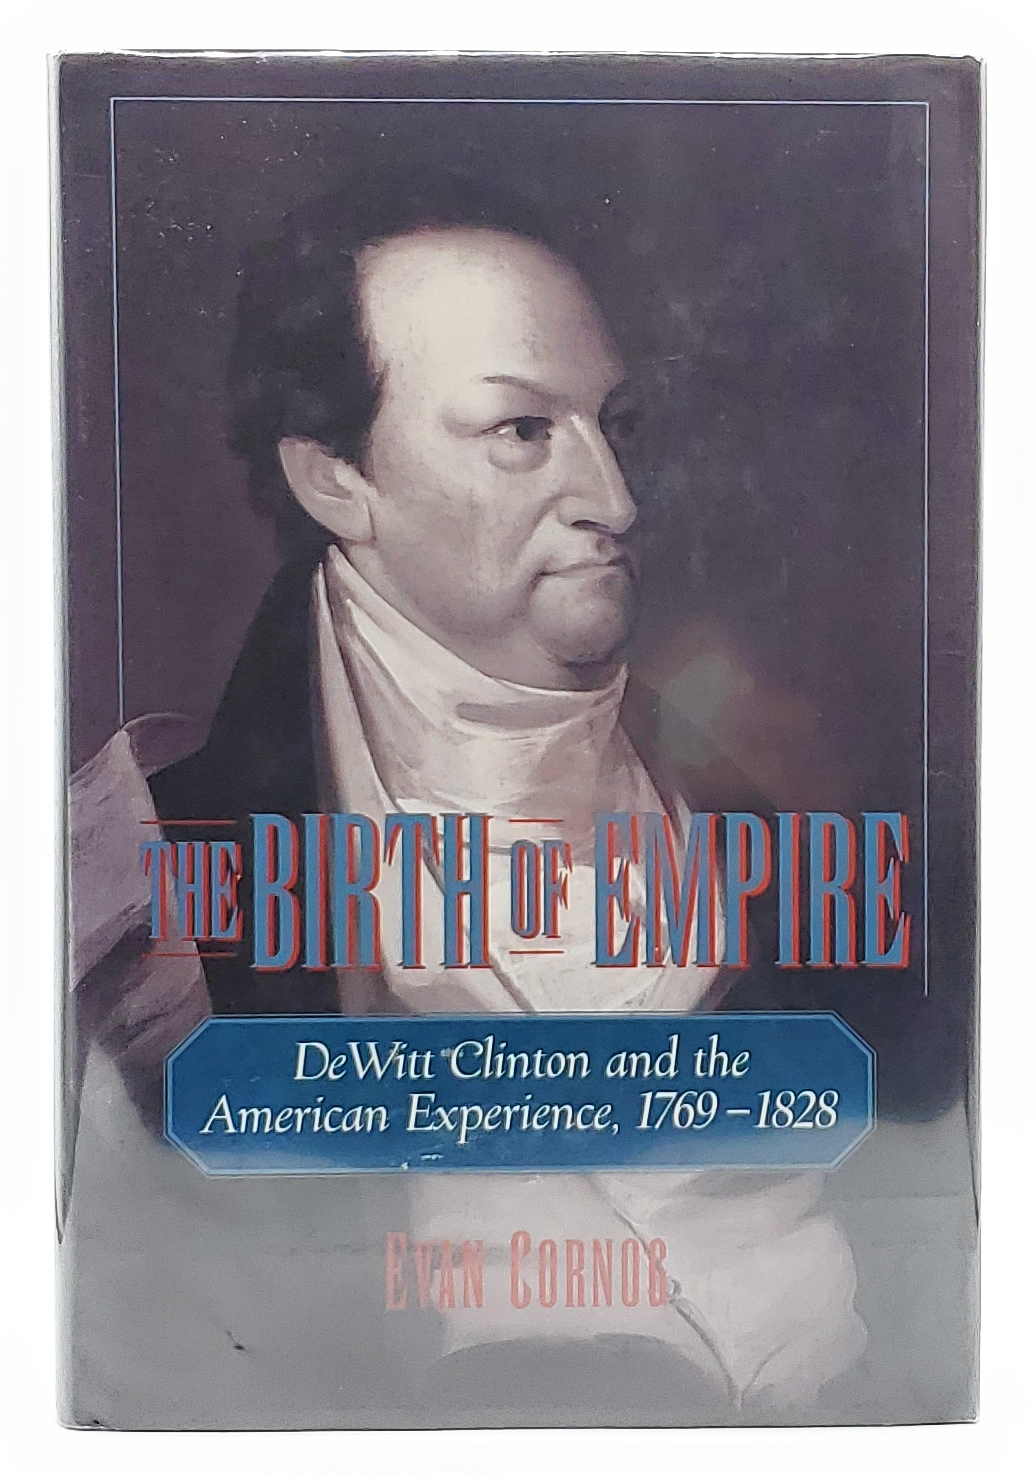 The Birth of Empire: Dewitt Clinton and the American Experience, 1769-1828 - Cornog, Evan